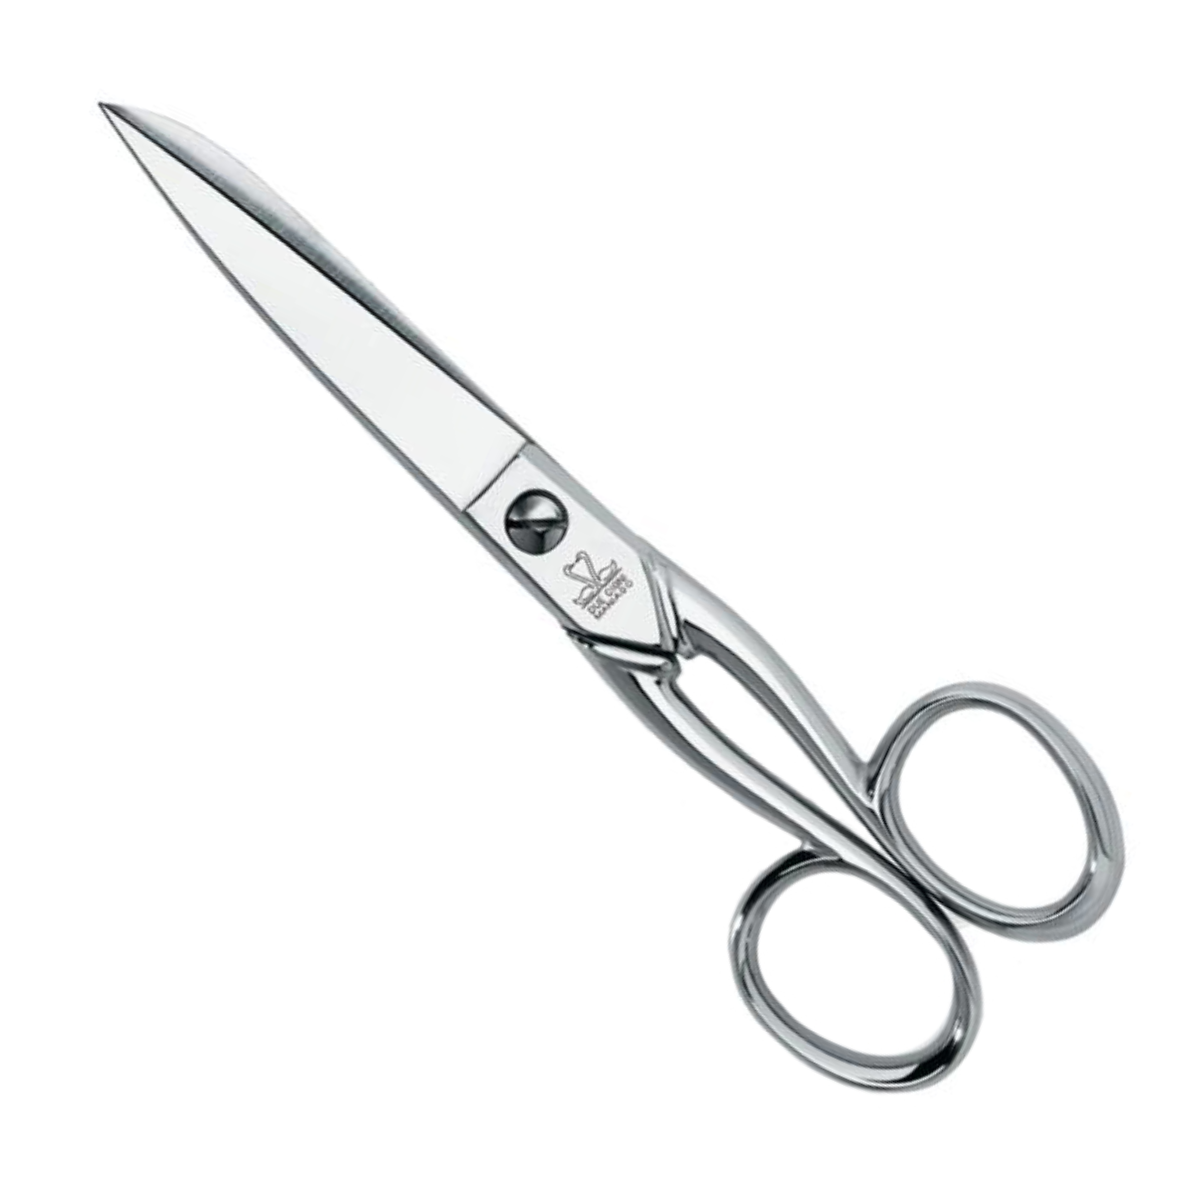 7 Inch Steel Household Scissors With Small Fingerhole